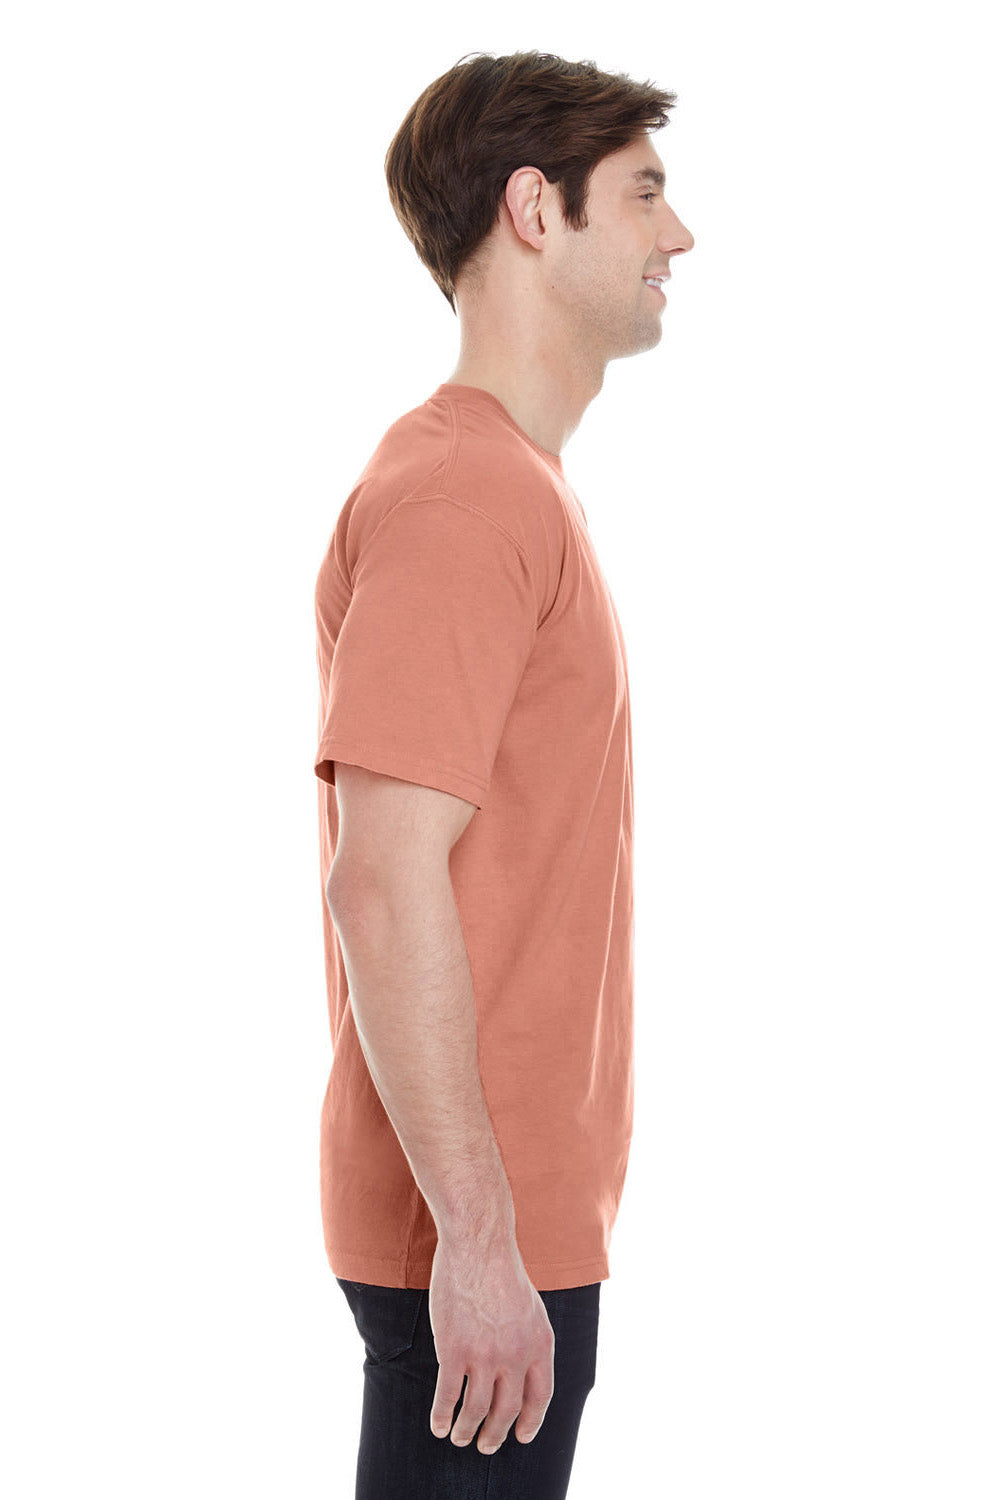 Comfort Colors C4017/4017 Mens Short Sleeve Crewneck T-Shirt Terracota SIde